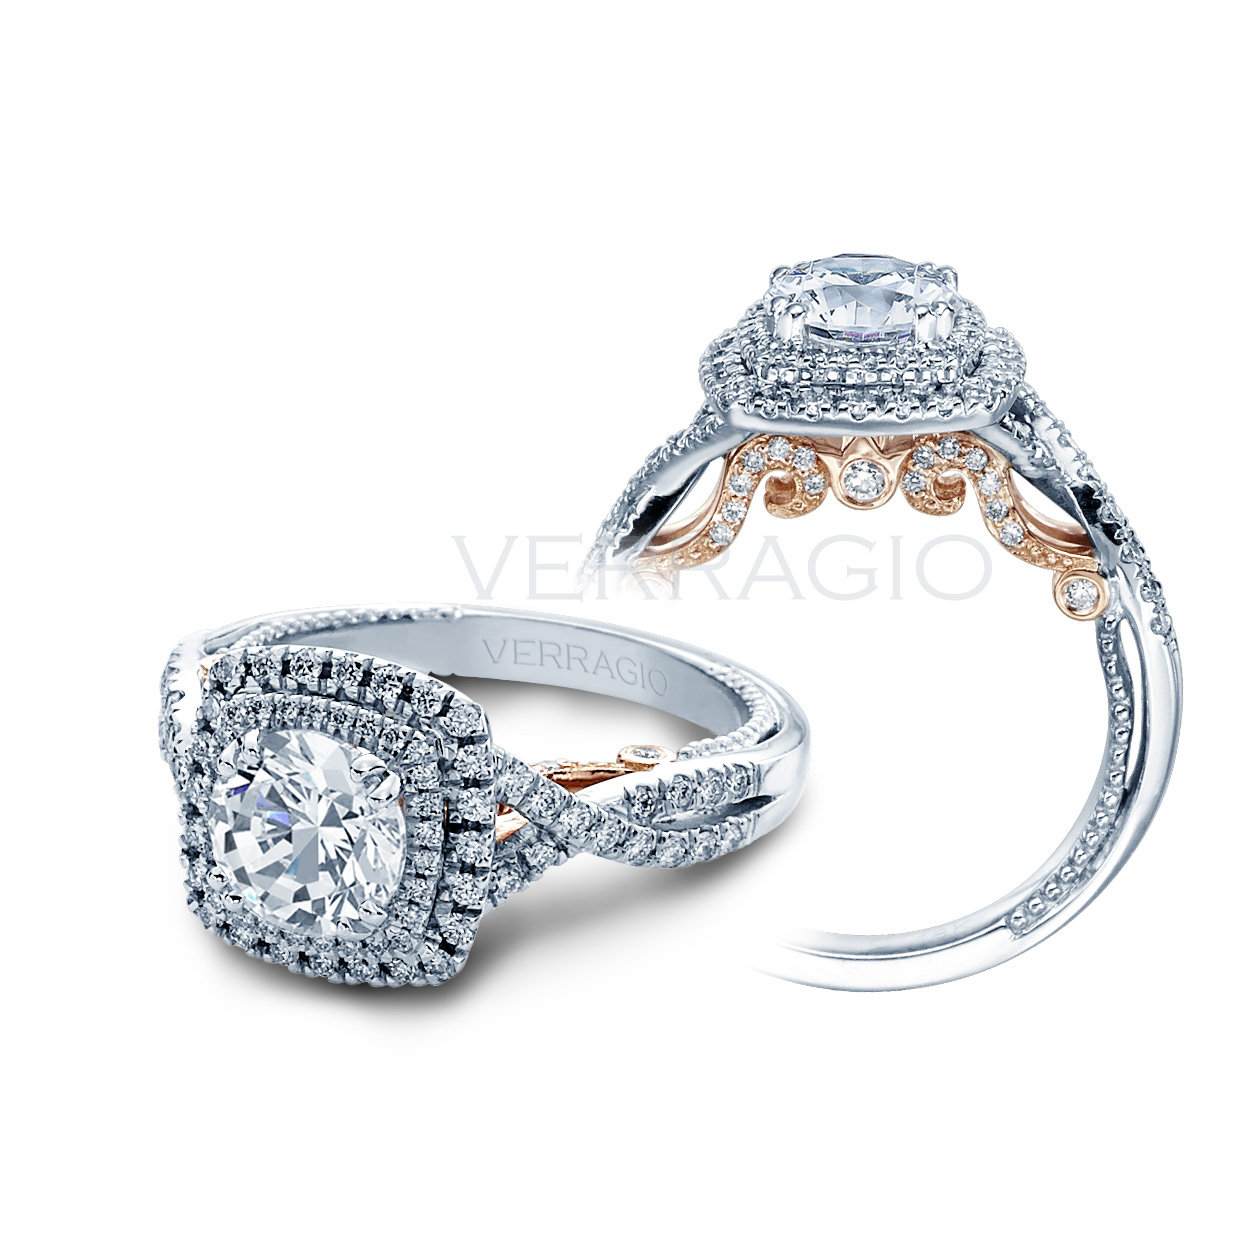 Two Tone Verragio Diamond Engagement Ring Setting